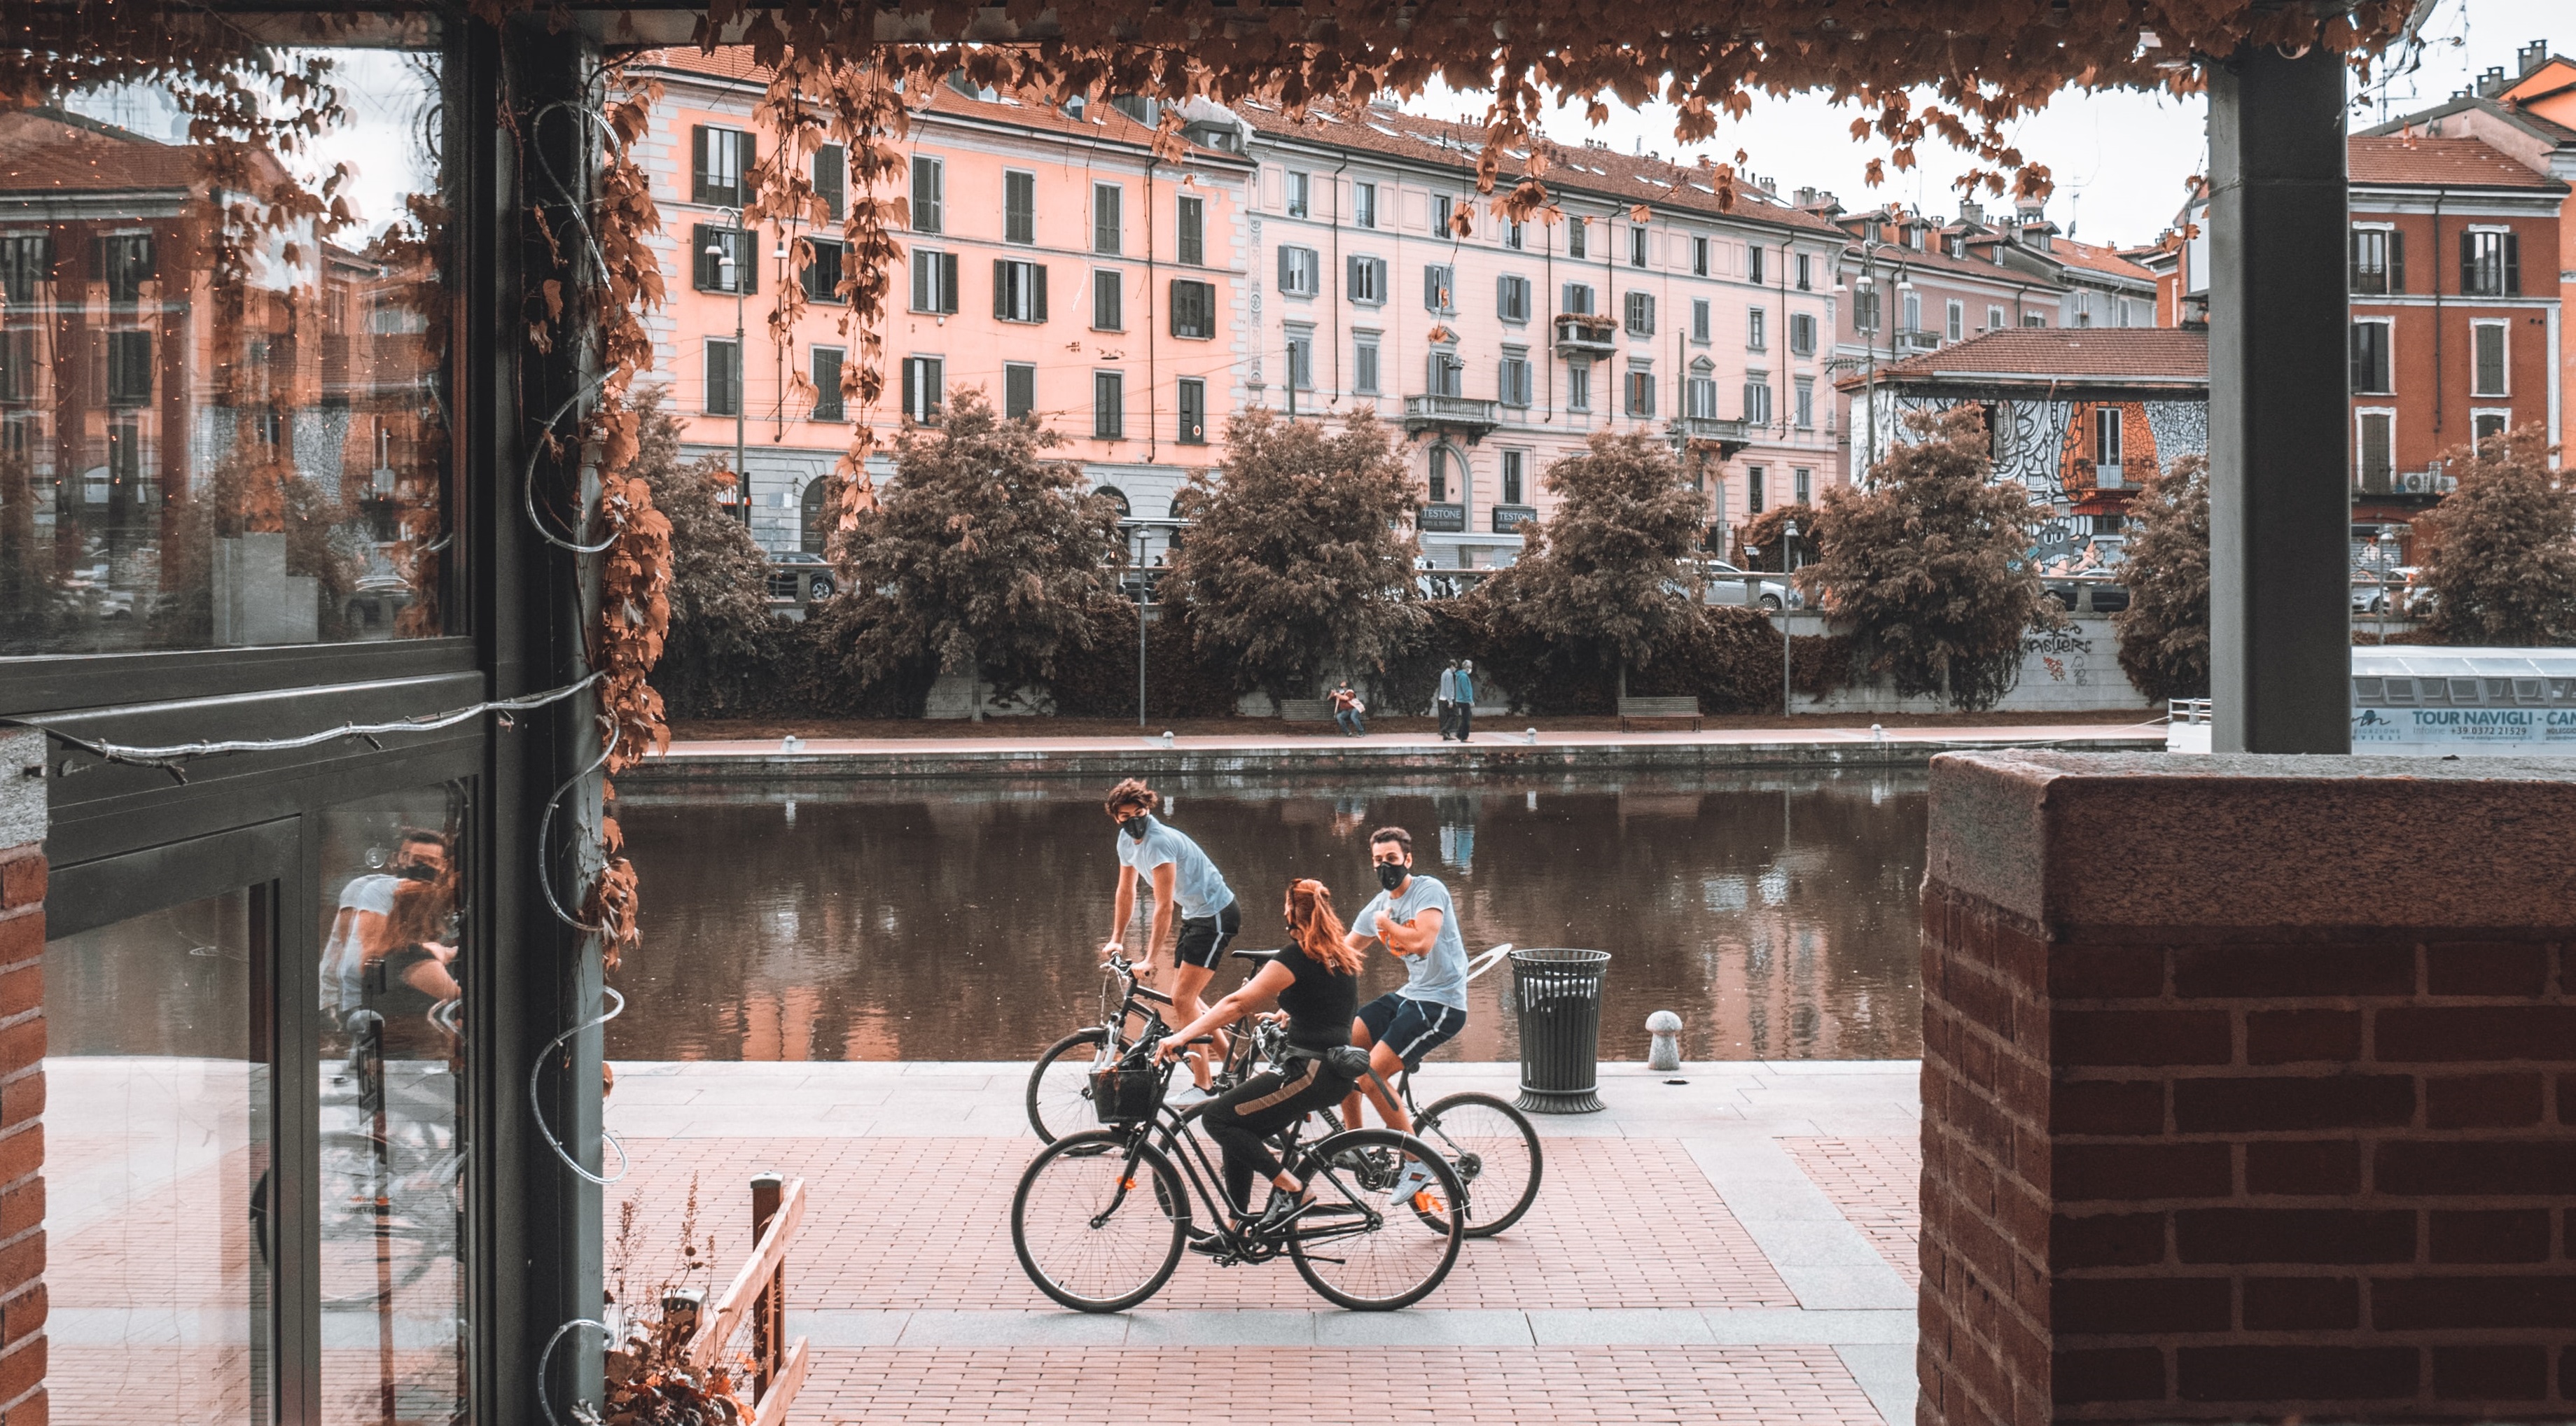 Milano - Lombardie investuje 11,5 EUR do cyklisitky na obyvatele | ecf.com